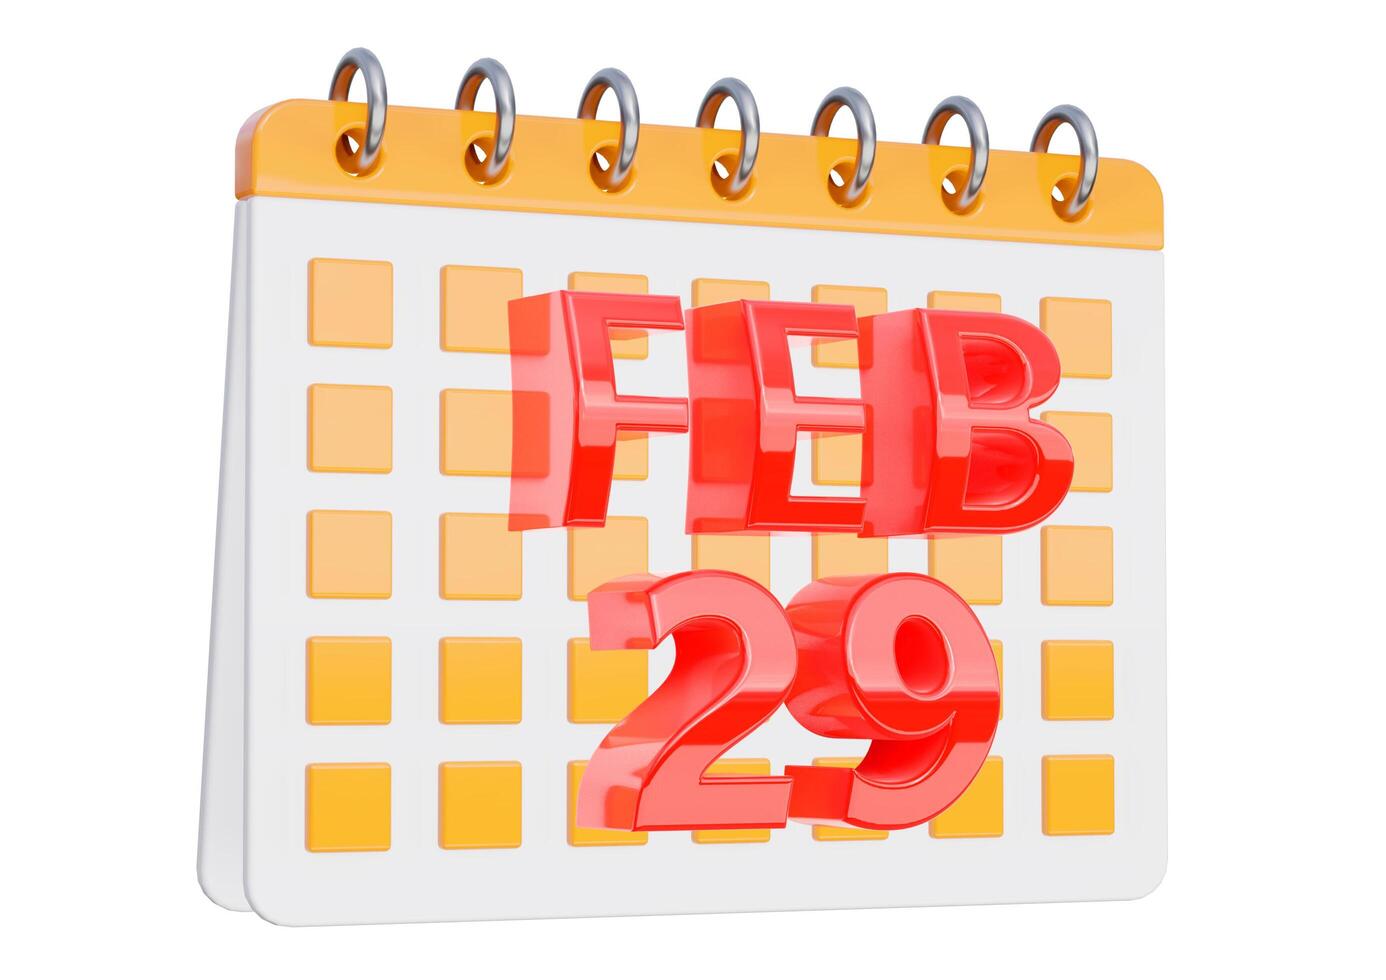 februari 29. kalender design isolerat på vit bakgrund foto